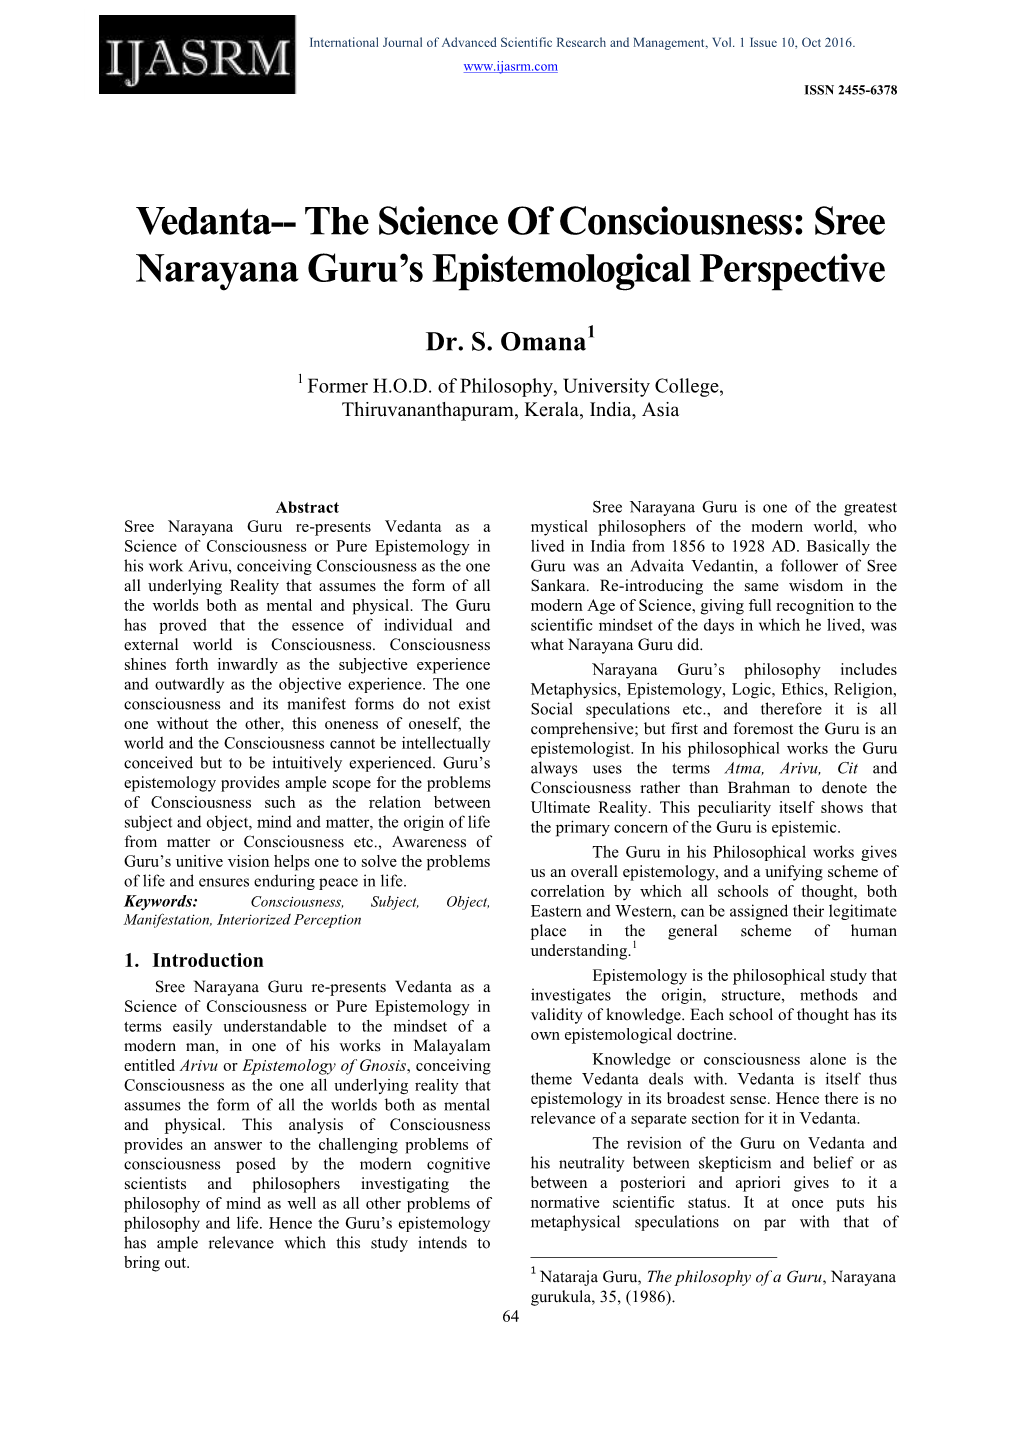 The Science of Consciousness: Sree Narayana Guru's Epistemological